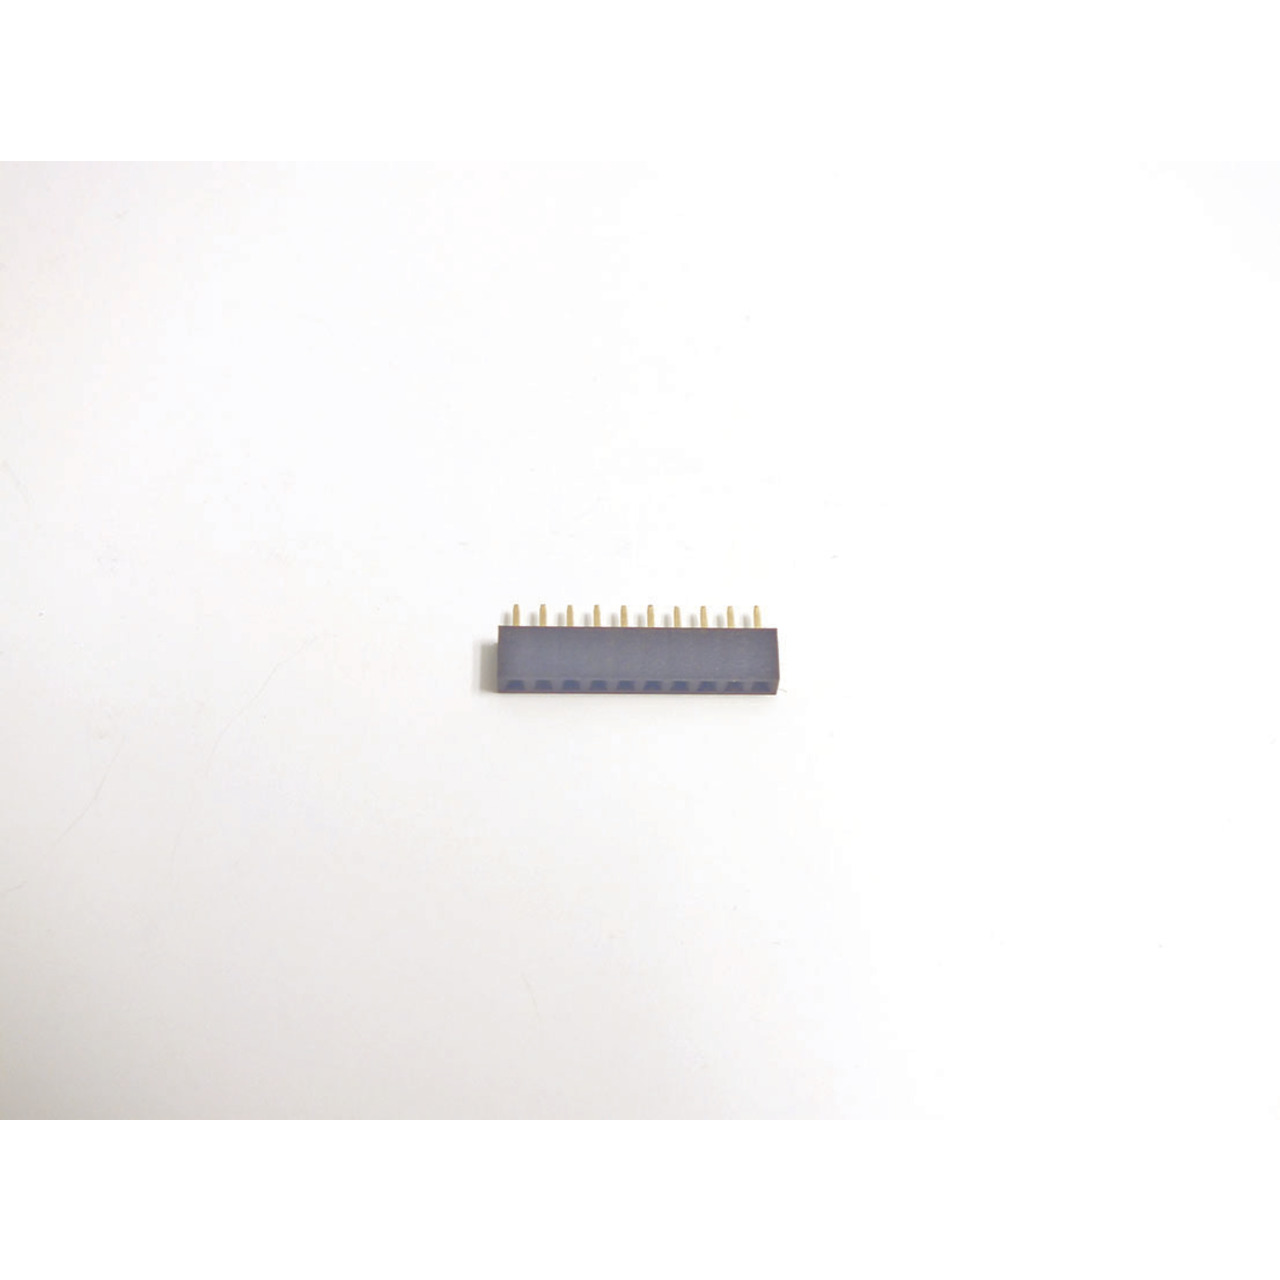 SMD-Buchsenleiste- 1x 20-polig- Körperhöhe 4-6 mm- gerade